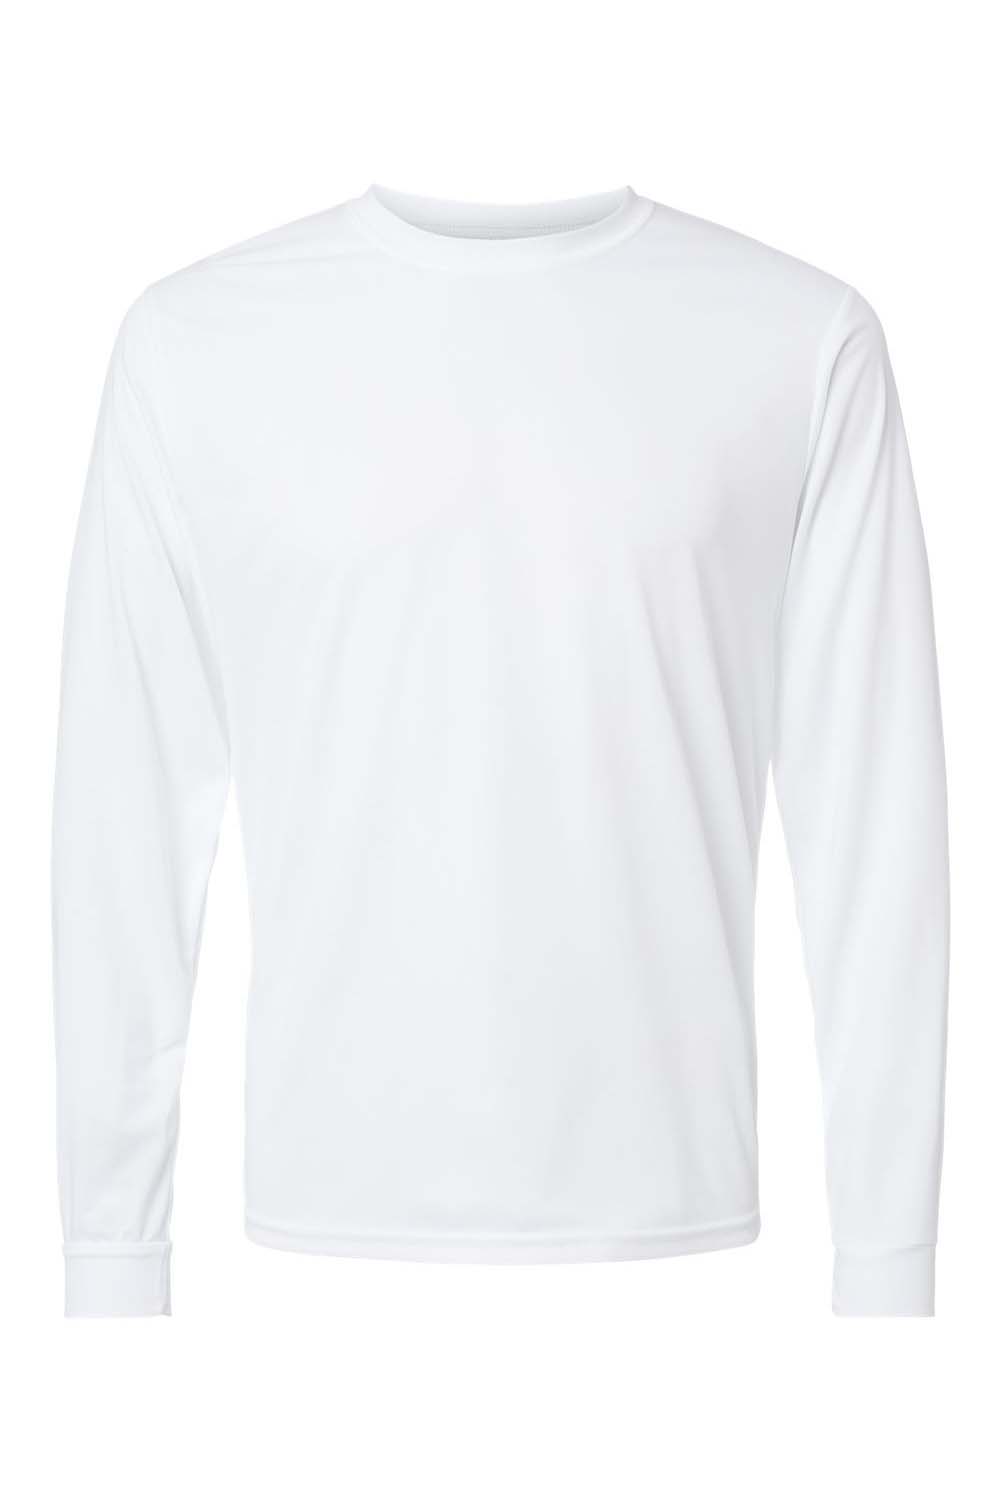 Augusta Sportswear 788 Mens Moisture Wicking Long Sleeve Crewneck T-Shirt White Model Flat Front